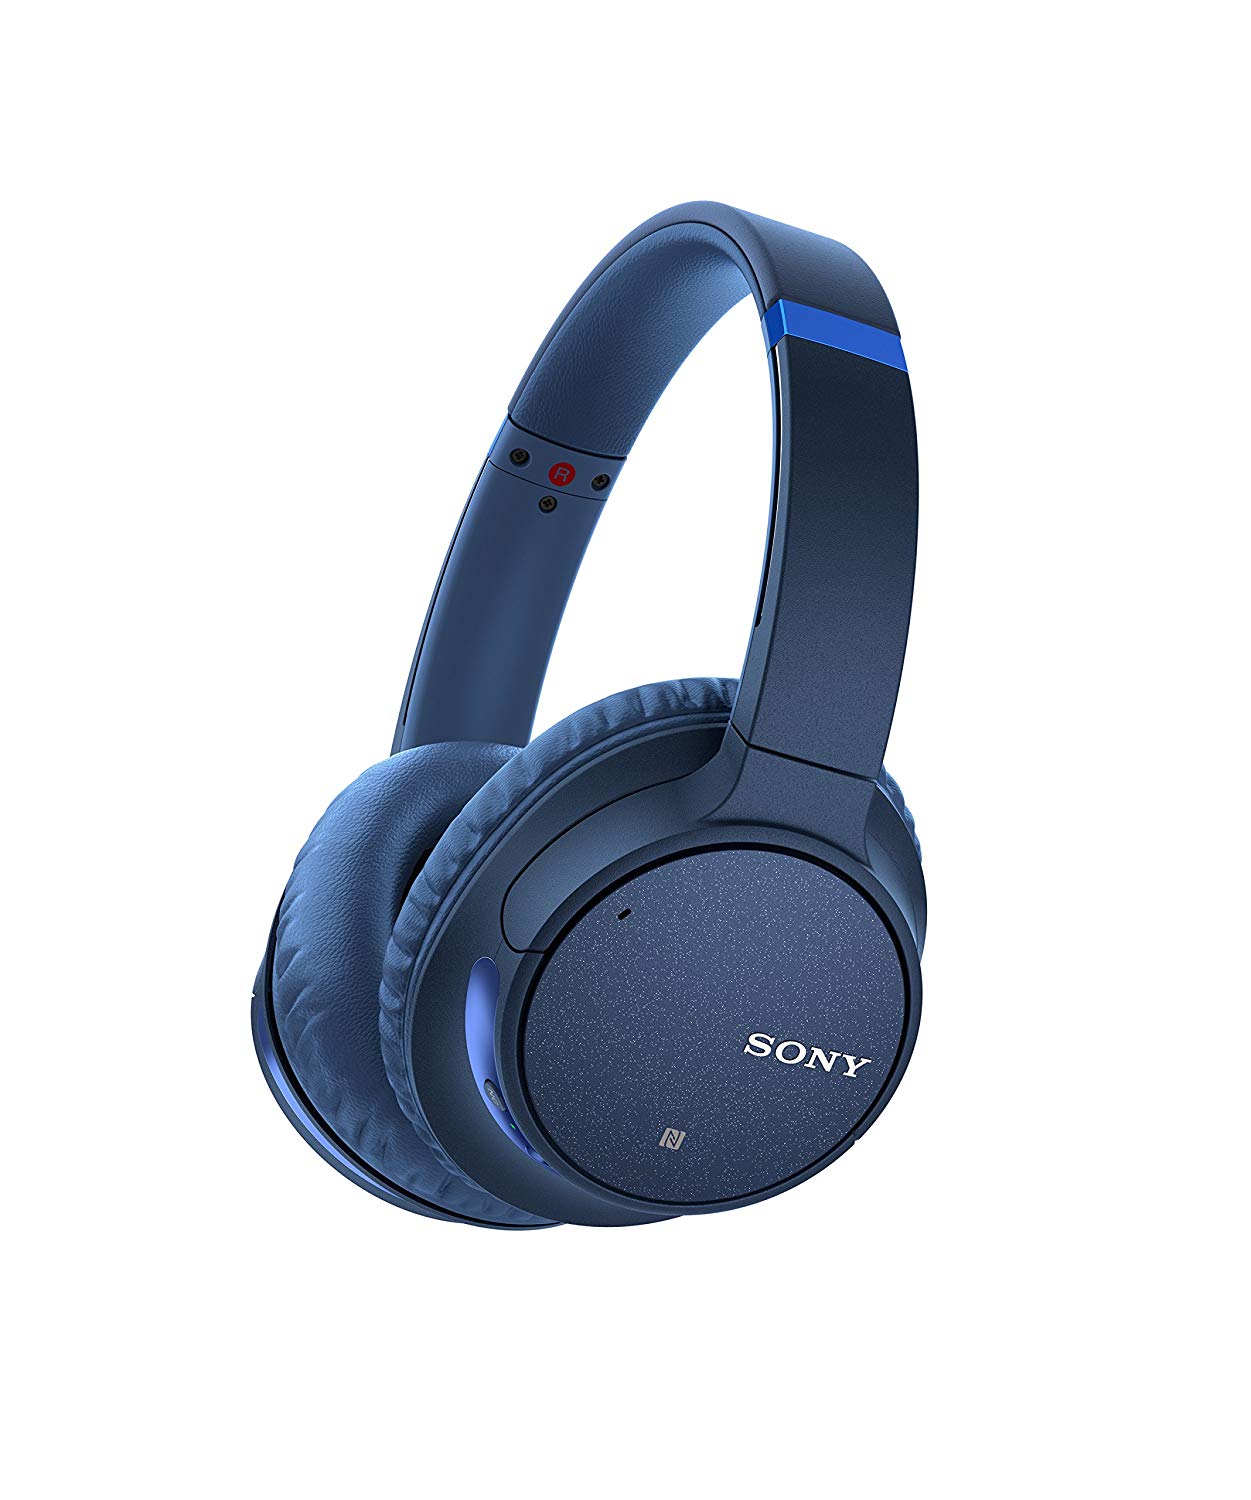 Le casque Bluetooth anti-bruit Sony WH-CH700N à 85 €